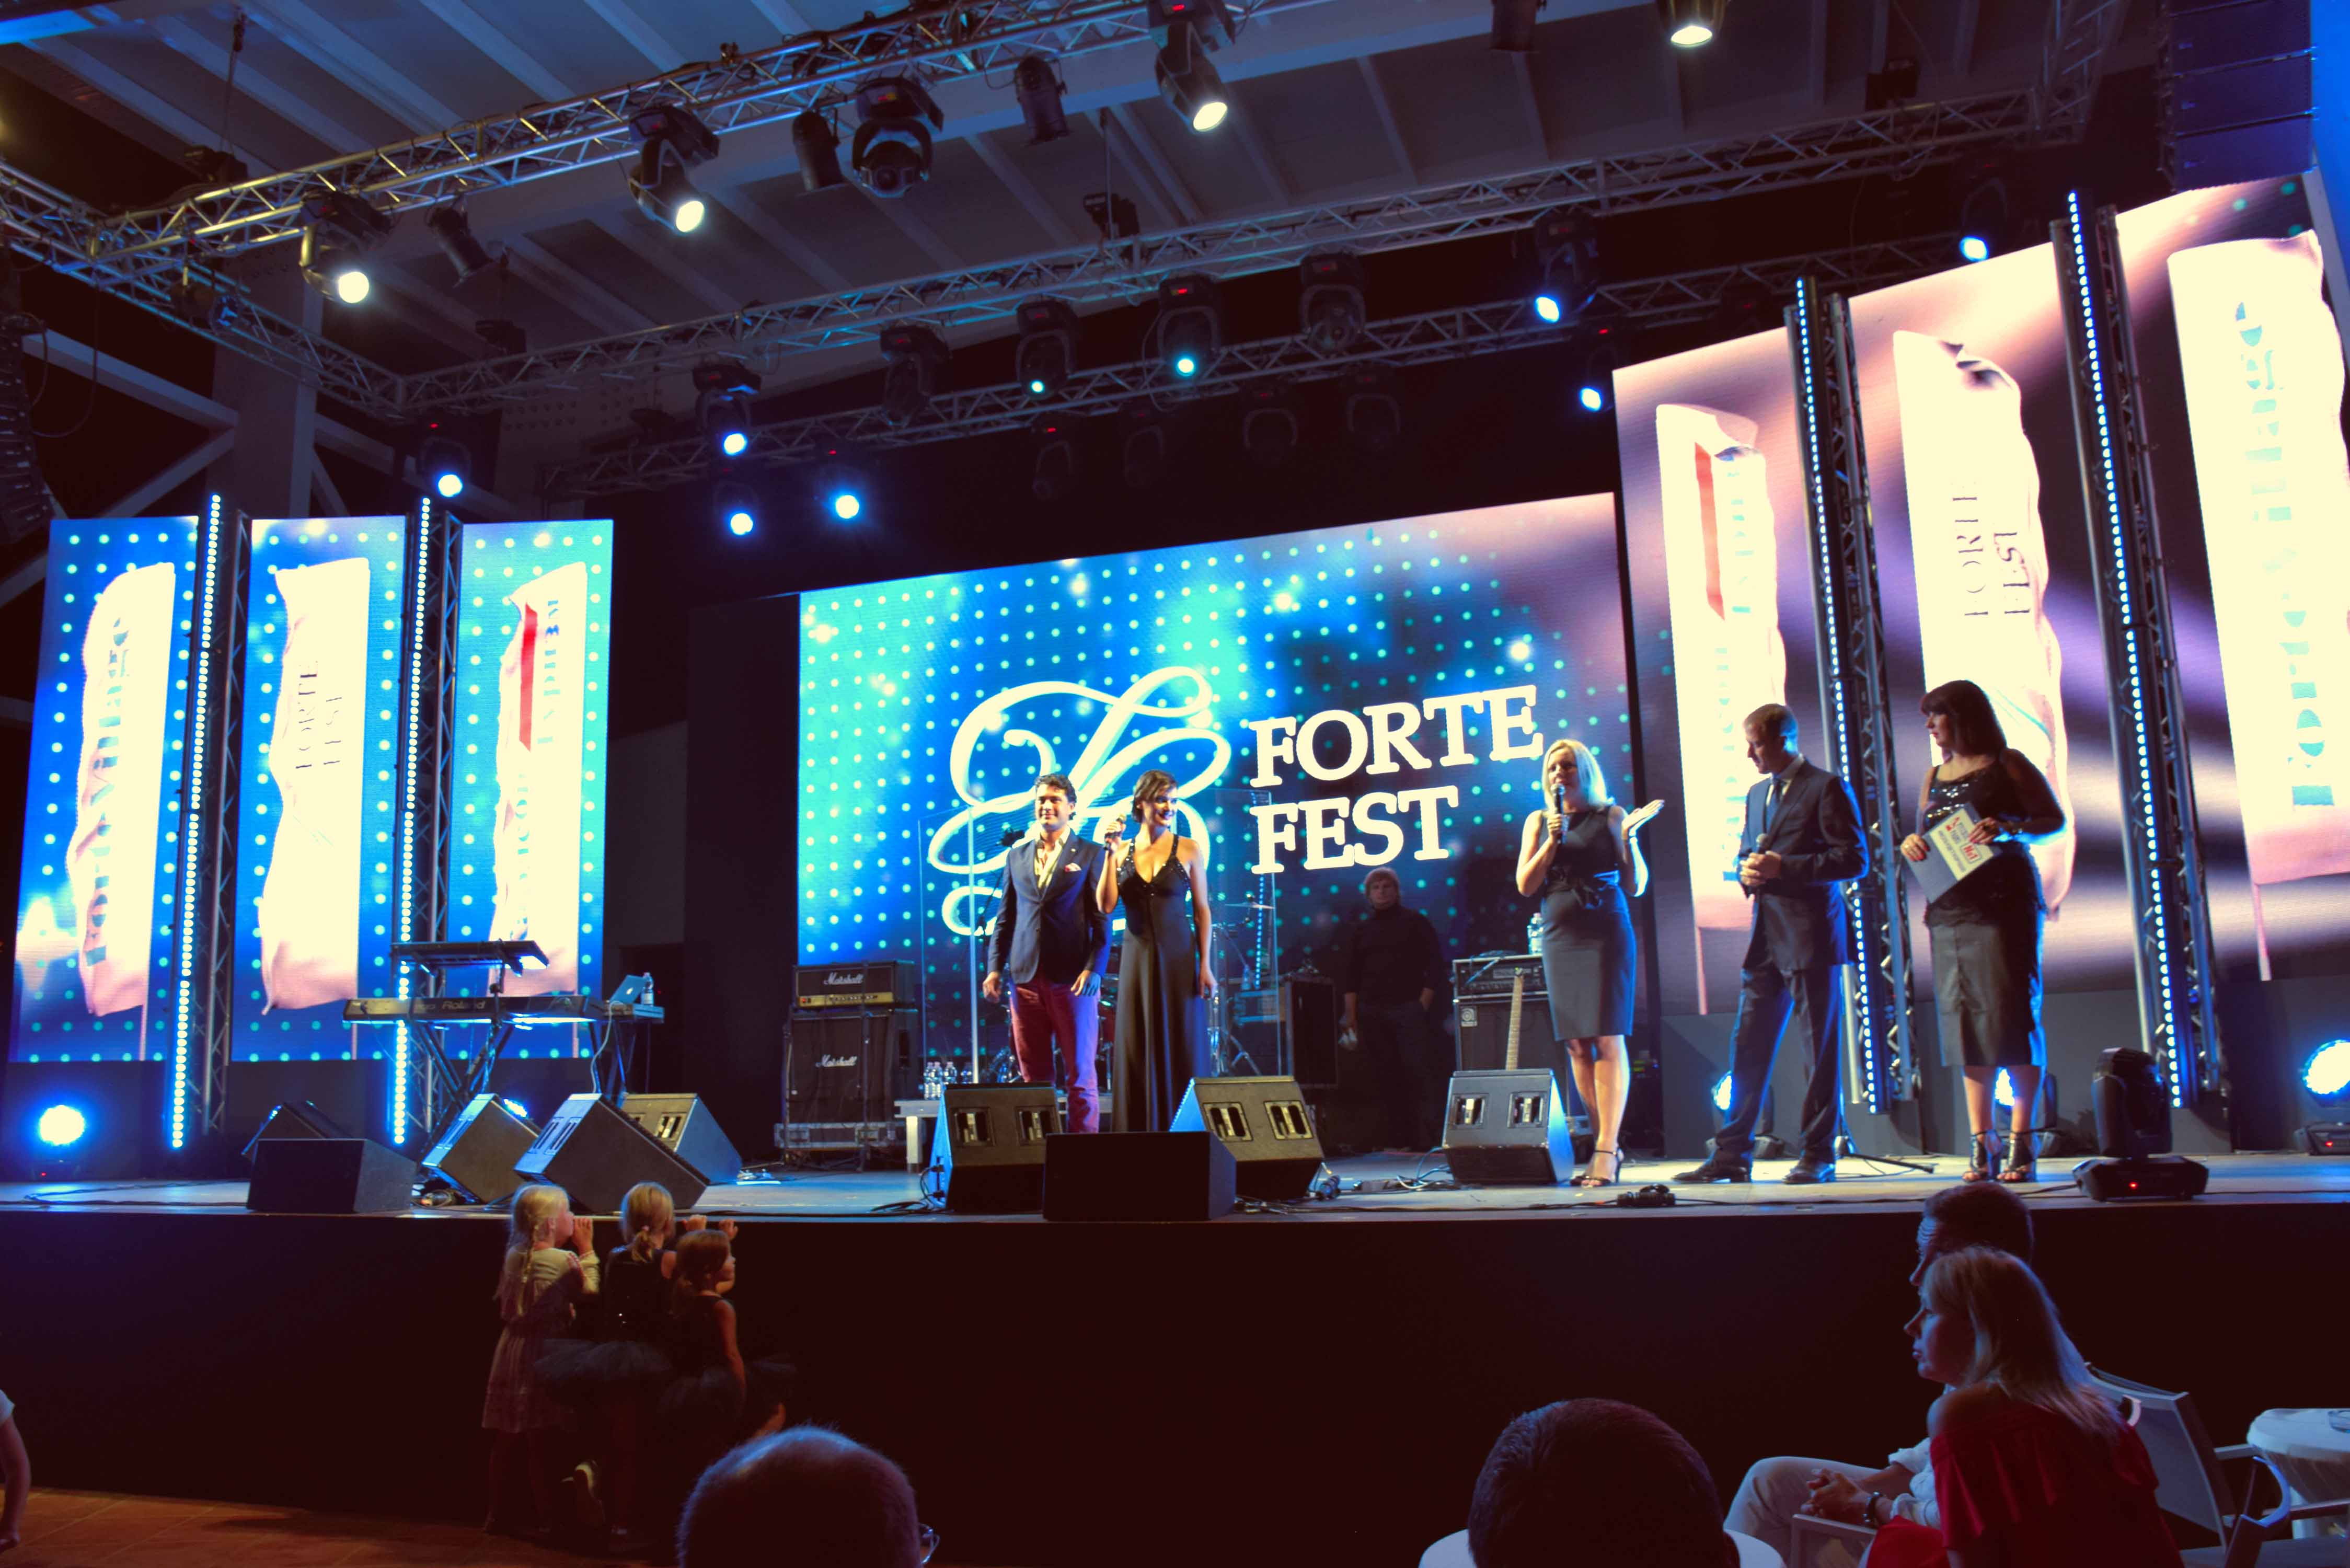 Более 300 туристов посетили фестиваль Forte Fest 2016 на Сардинии